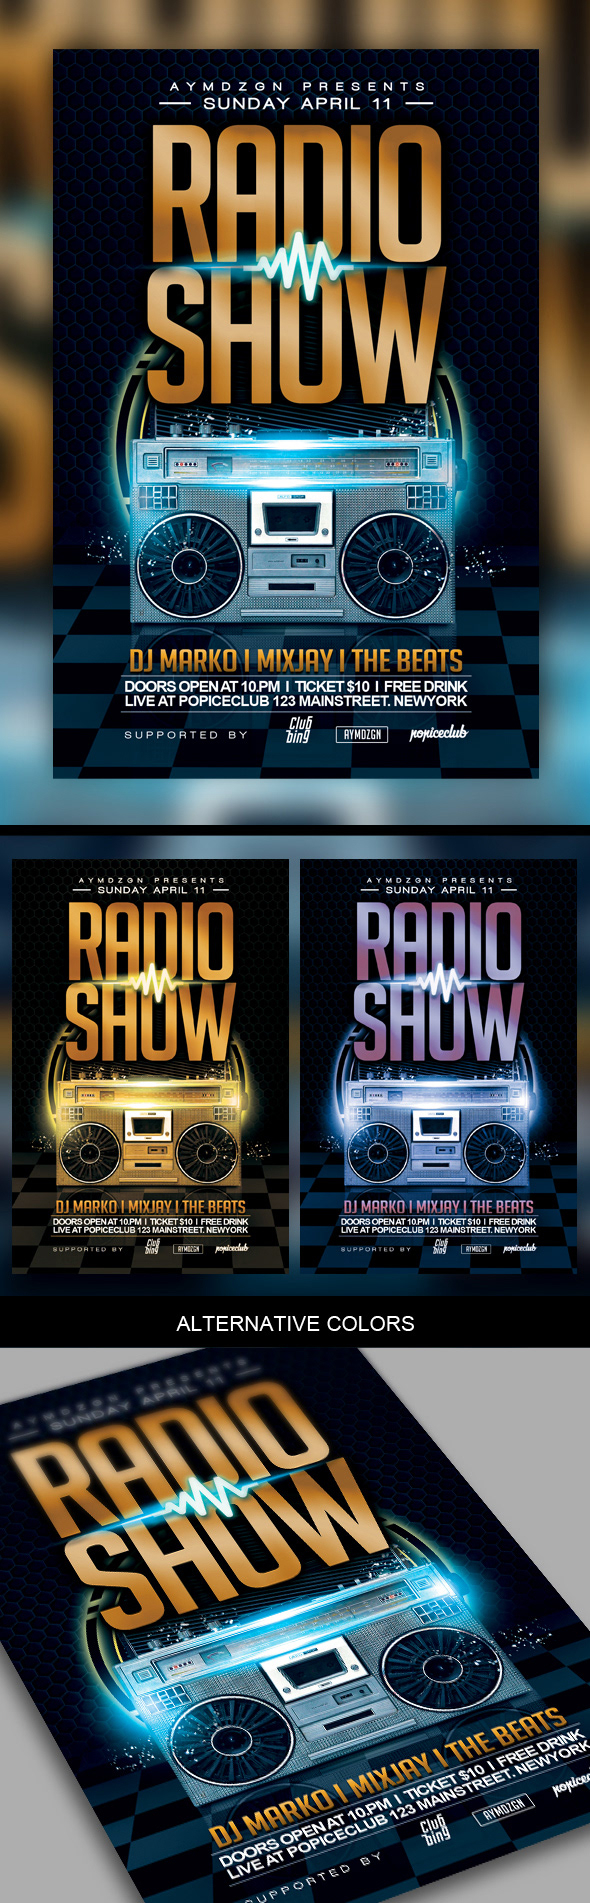 Radio Show Flyer Template on Behance Inside Radio Show Flyer Template Within Radio Show Flyer Template